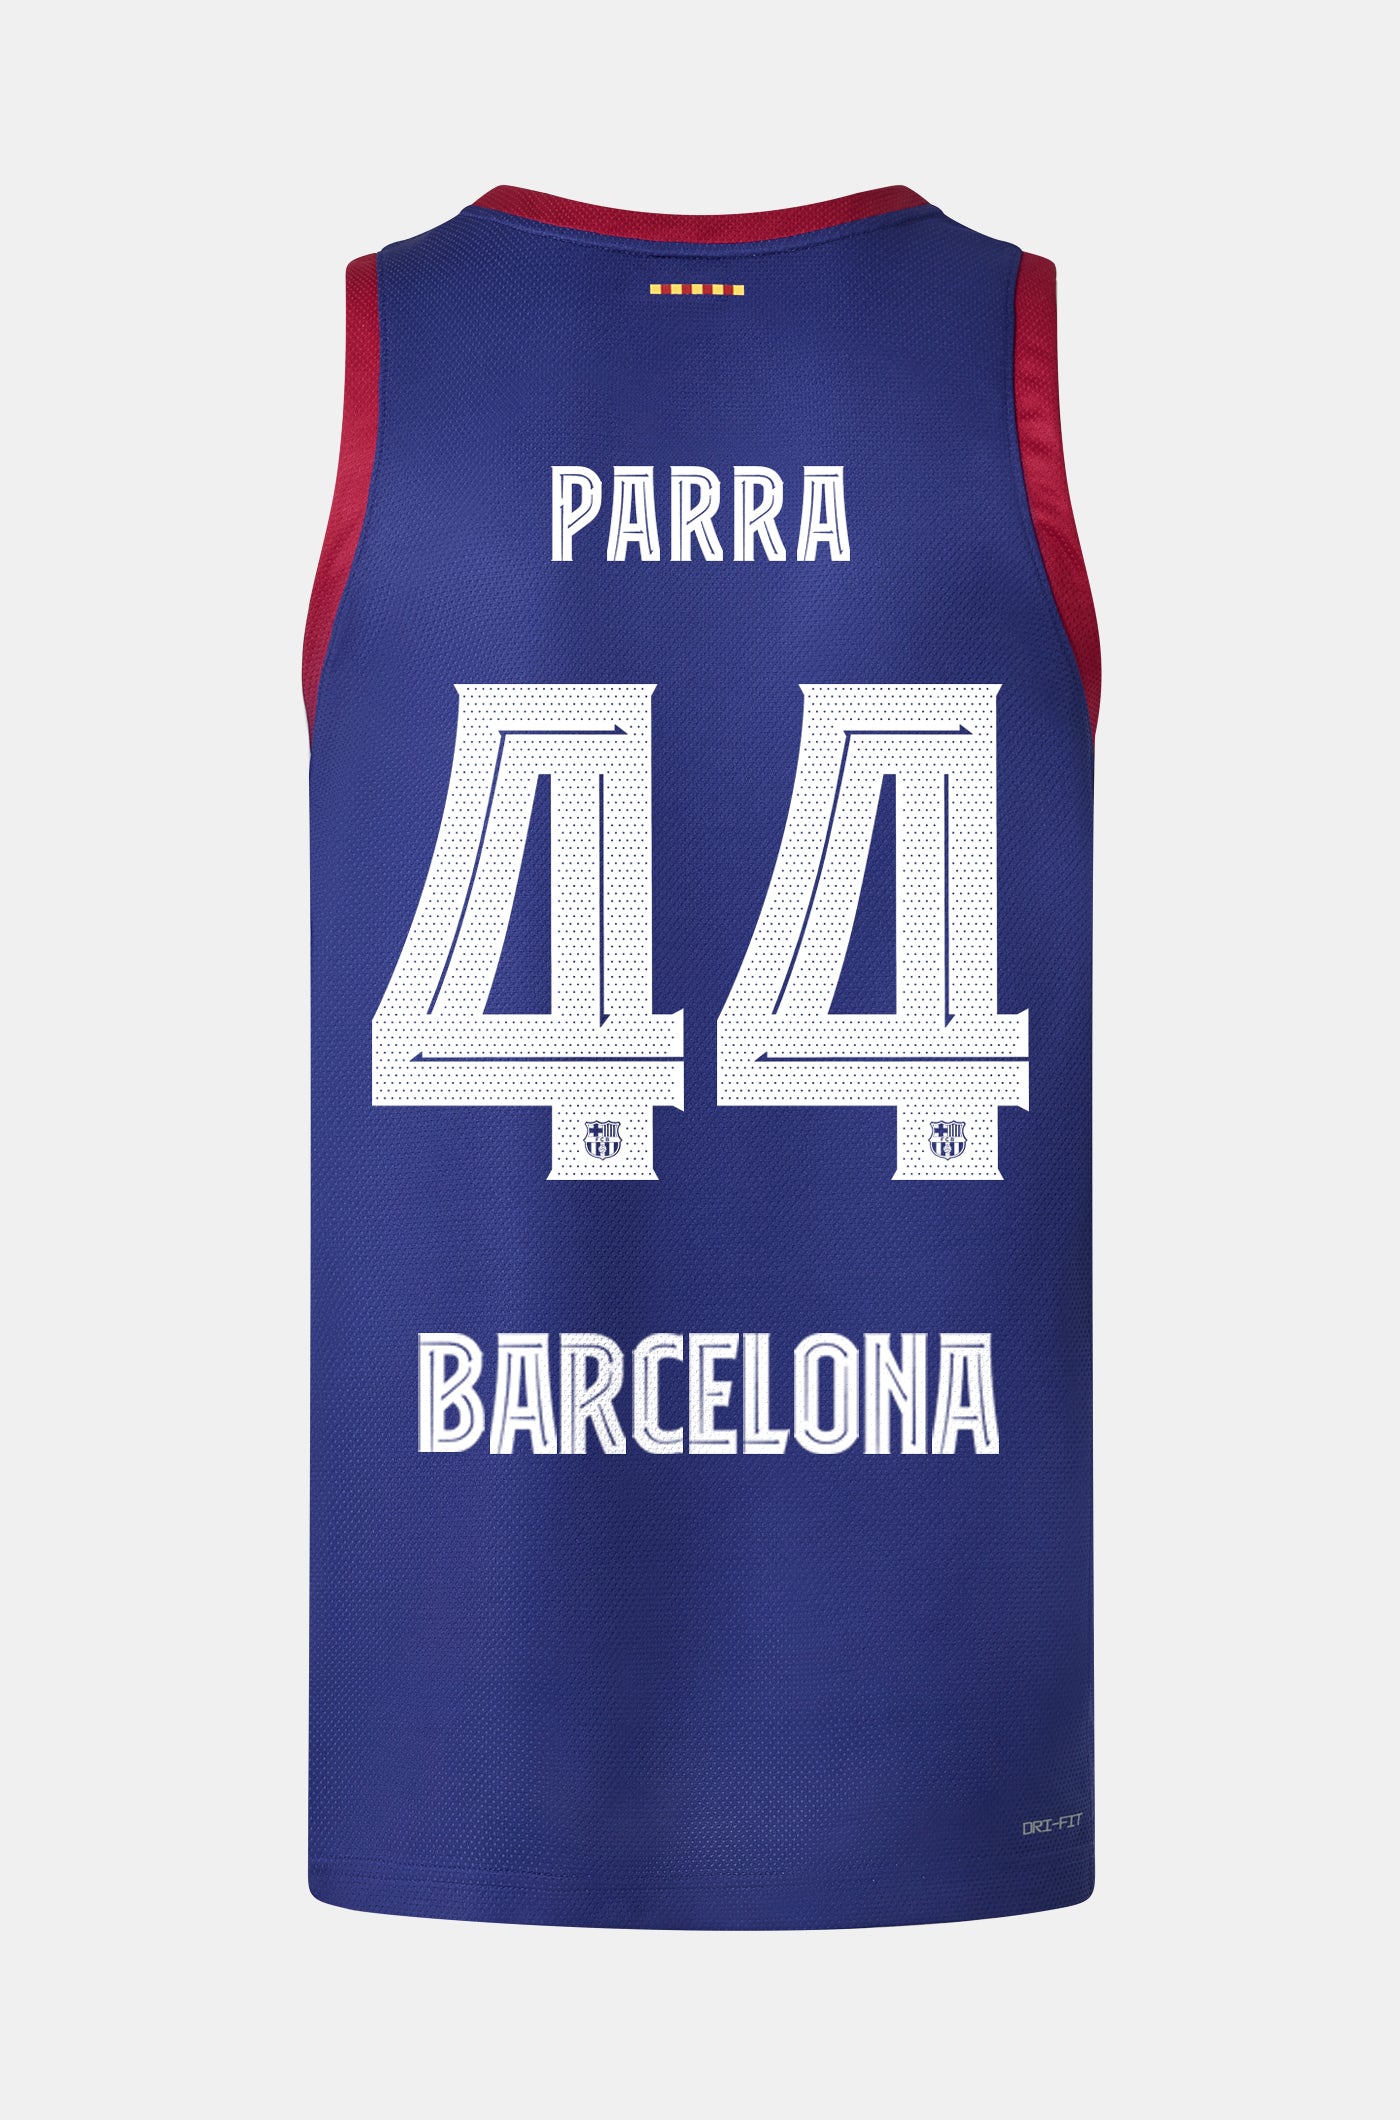 Euroleague FC Barcelona home basketball shirt 23/24 - PARRA